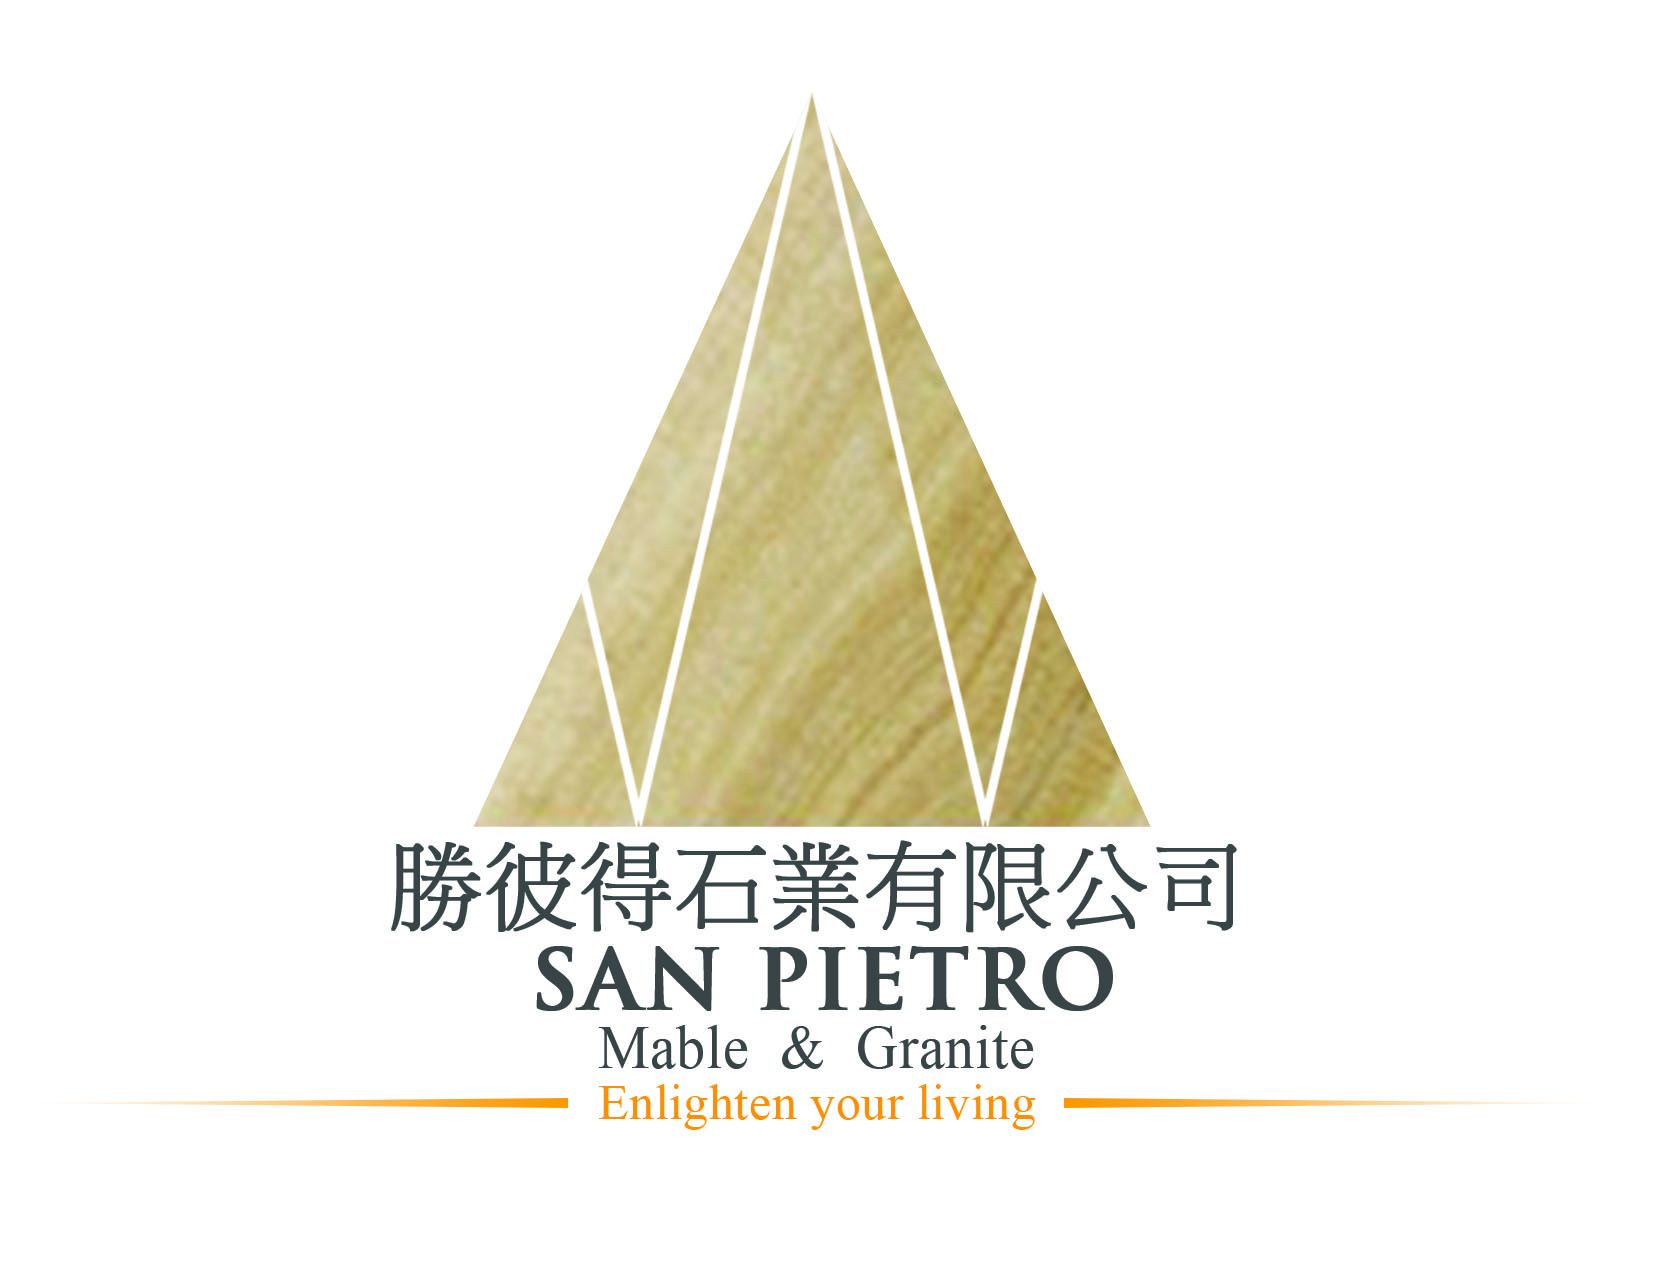 San Pietro Marble & Granite Ltd. Company